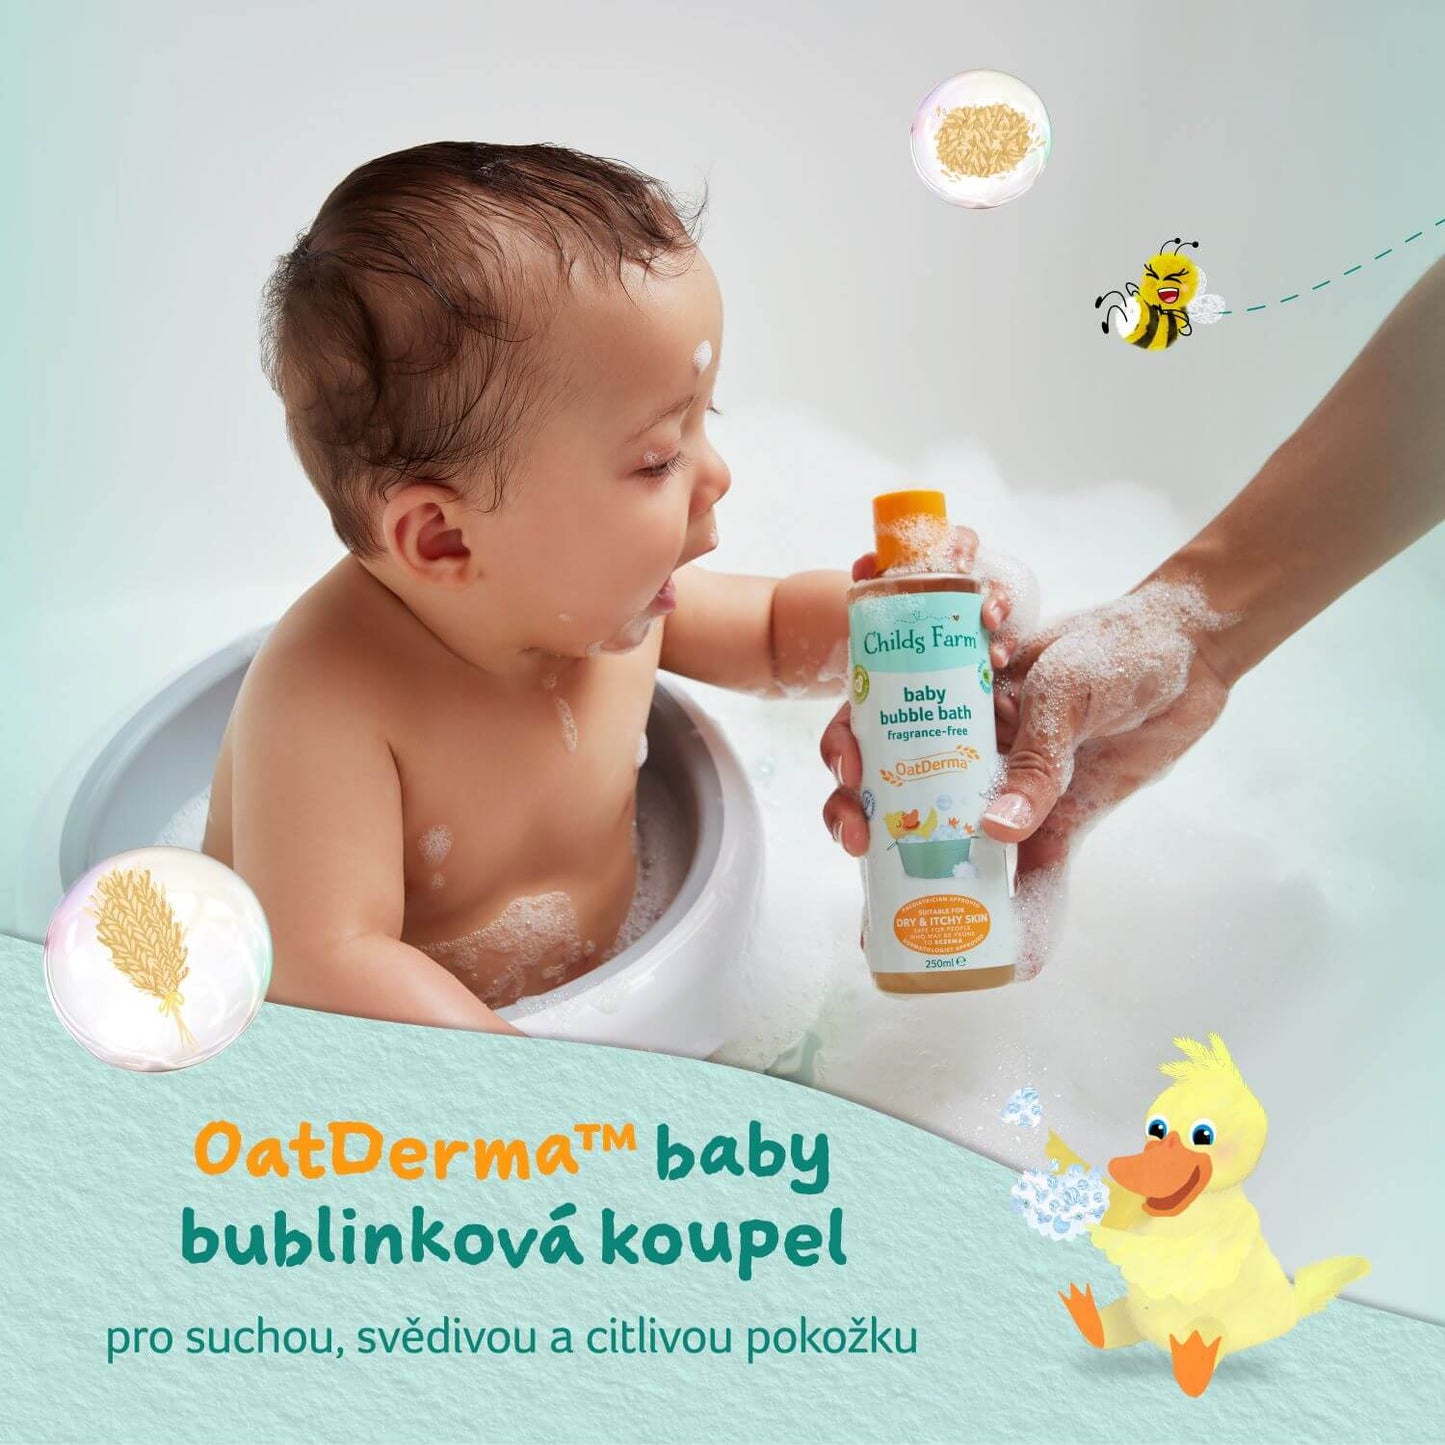 Childs Farm OatDerma™ baby bubble bath fragrance-free